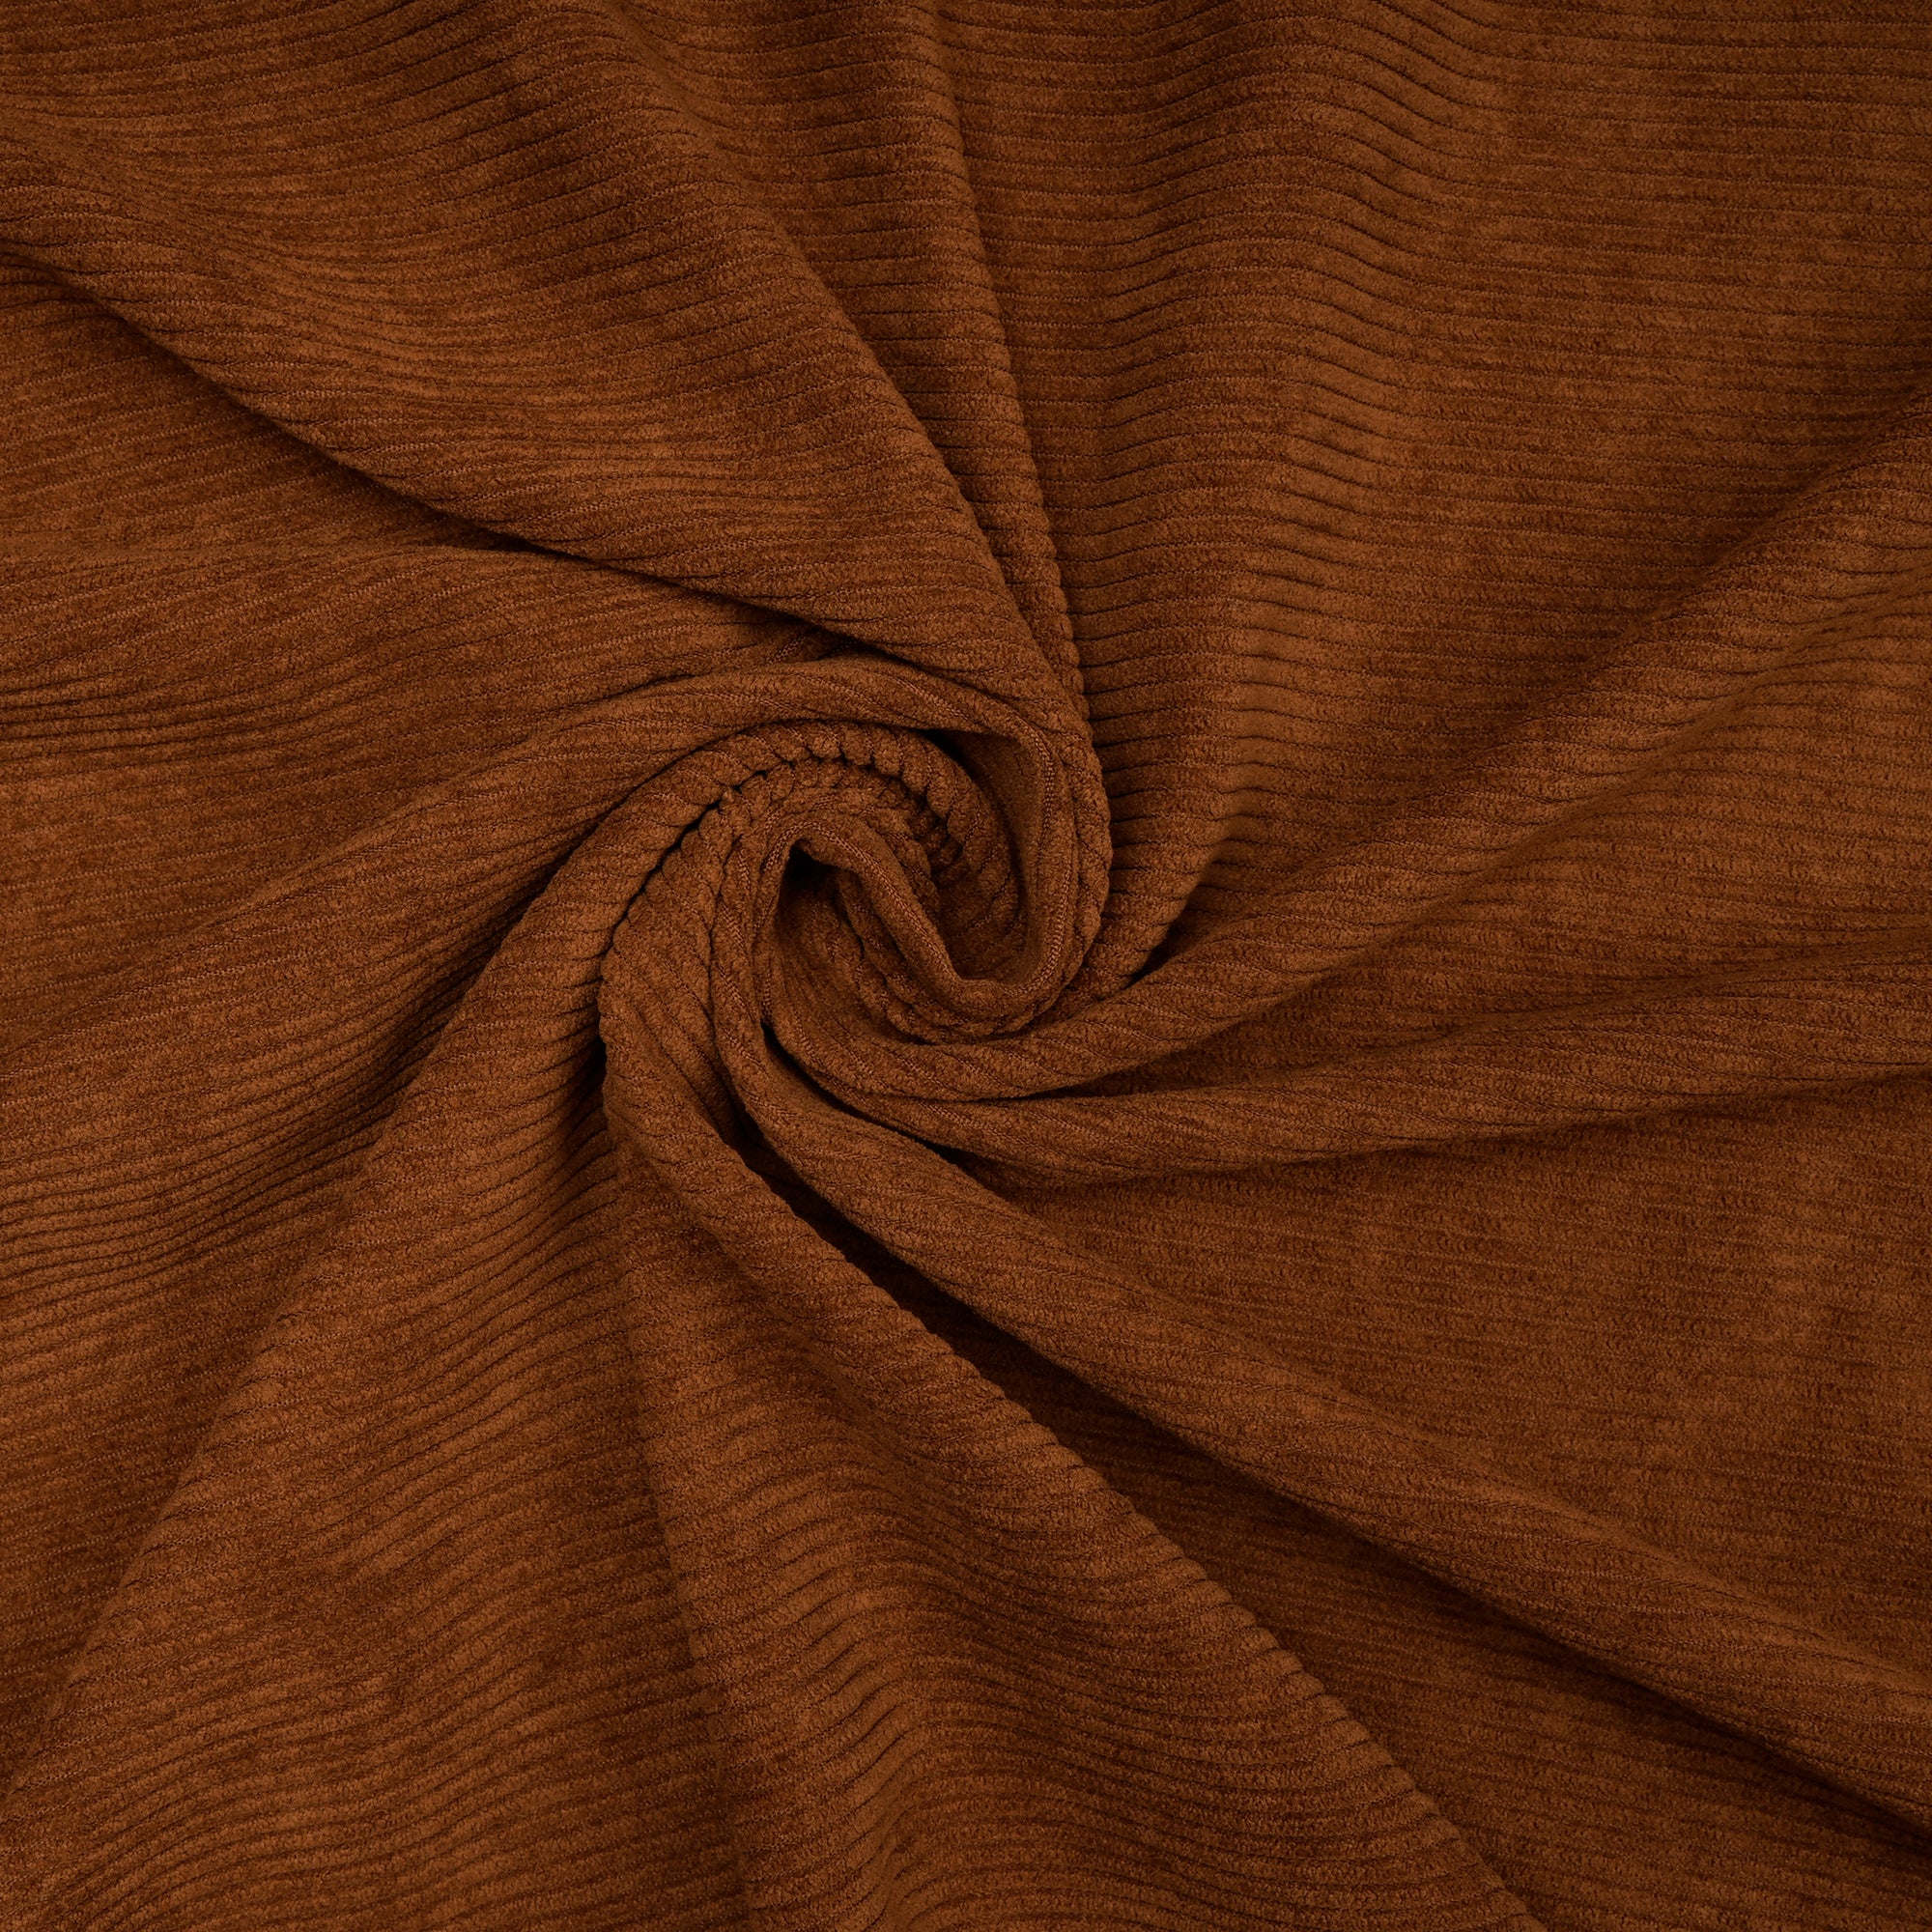 Sunburn Imported Cotton Corduroy Fabric (60" Wide)